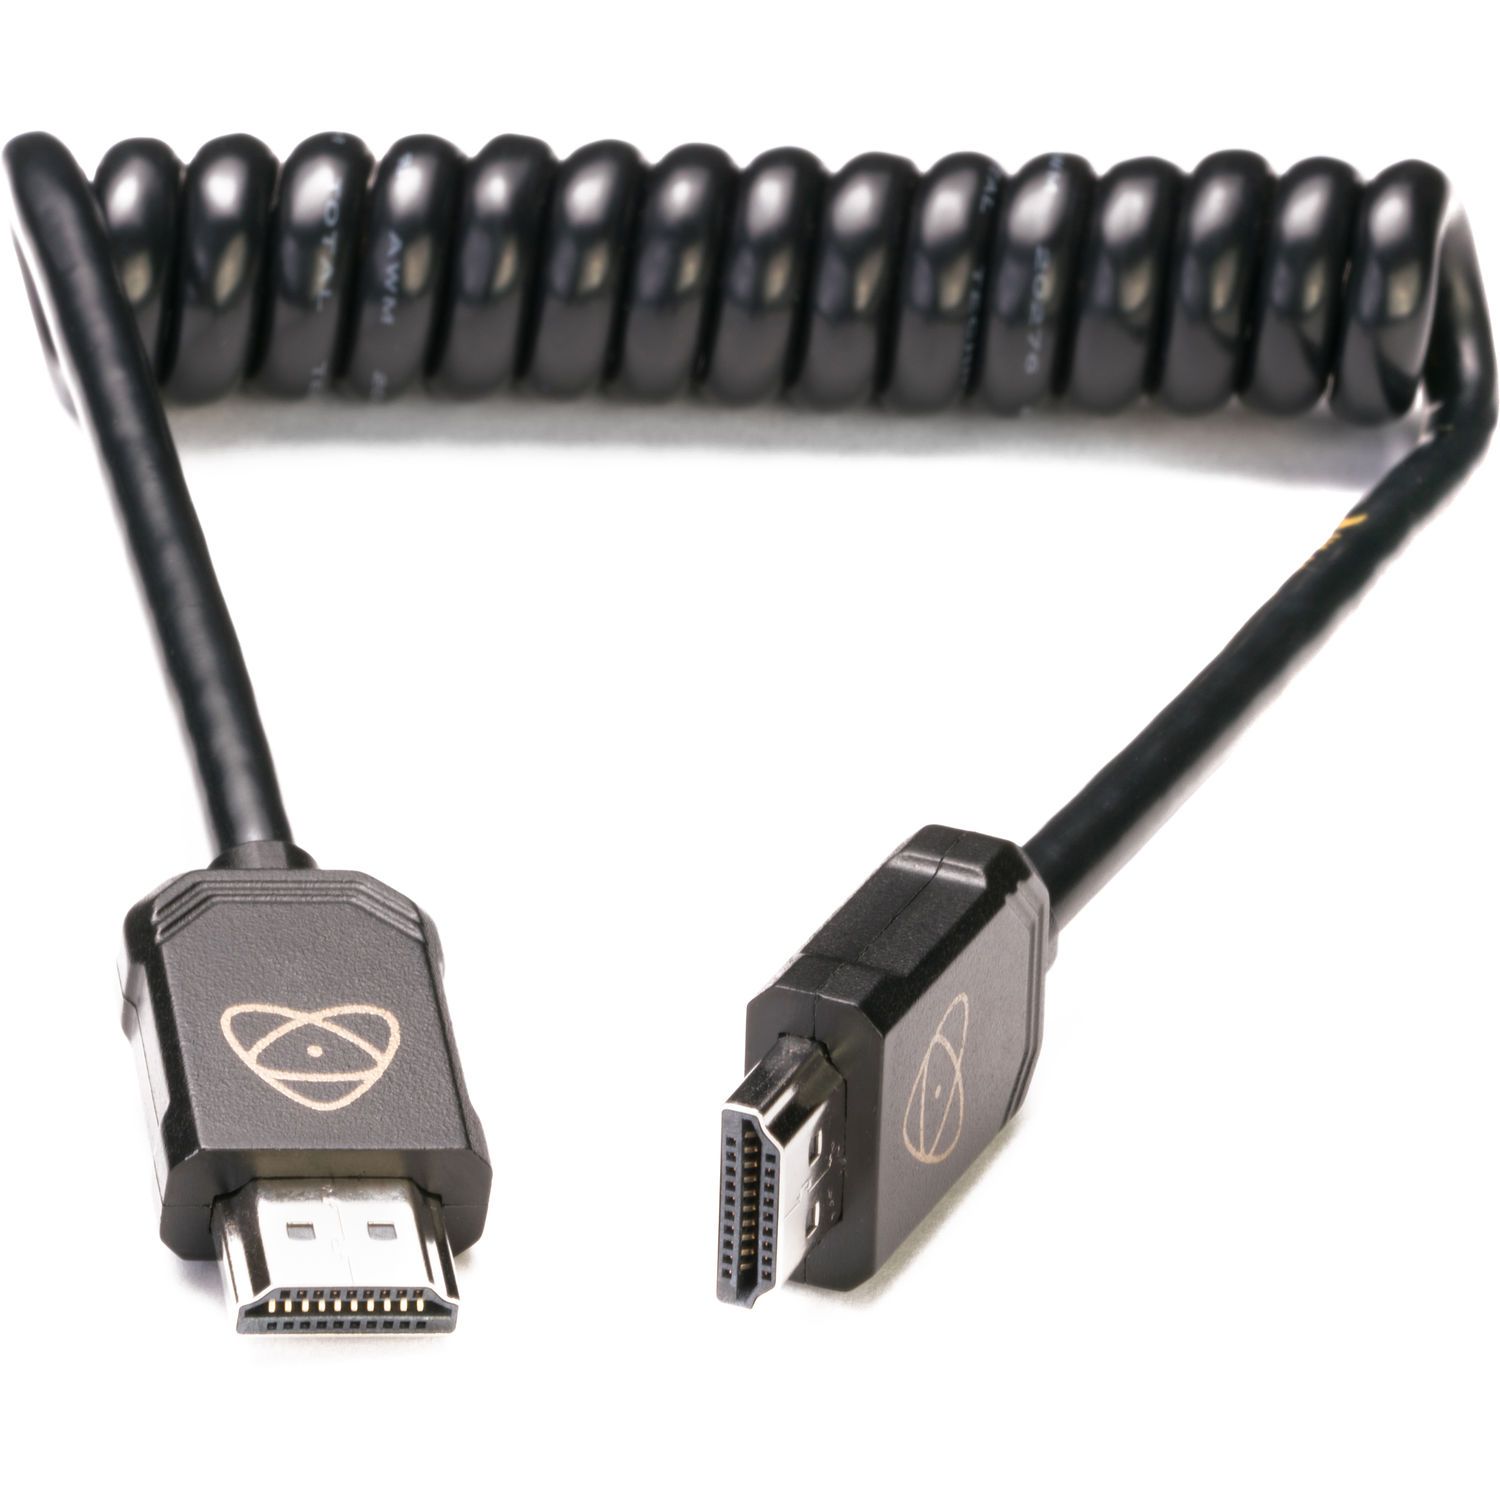 ATOMOS - Full HDMI 4K60p Cable